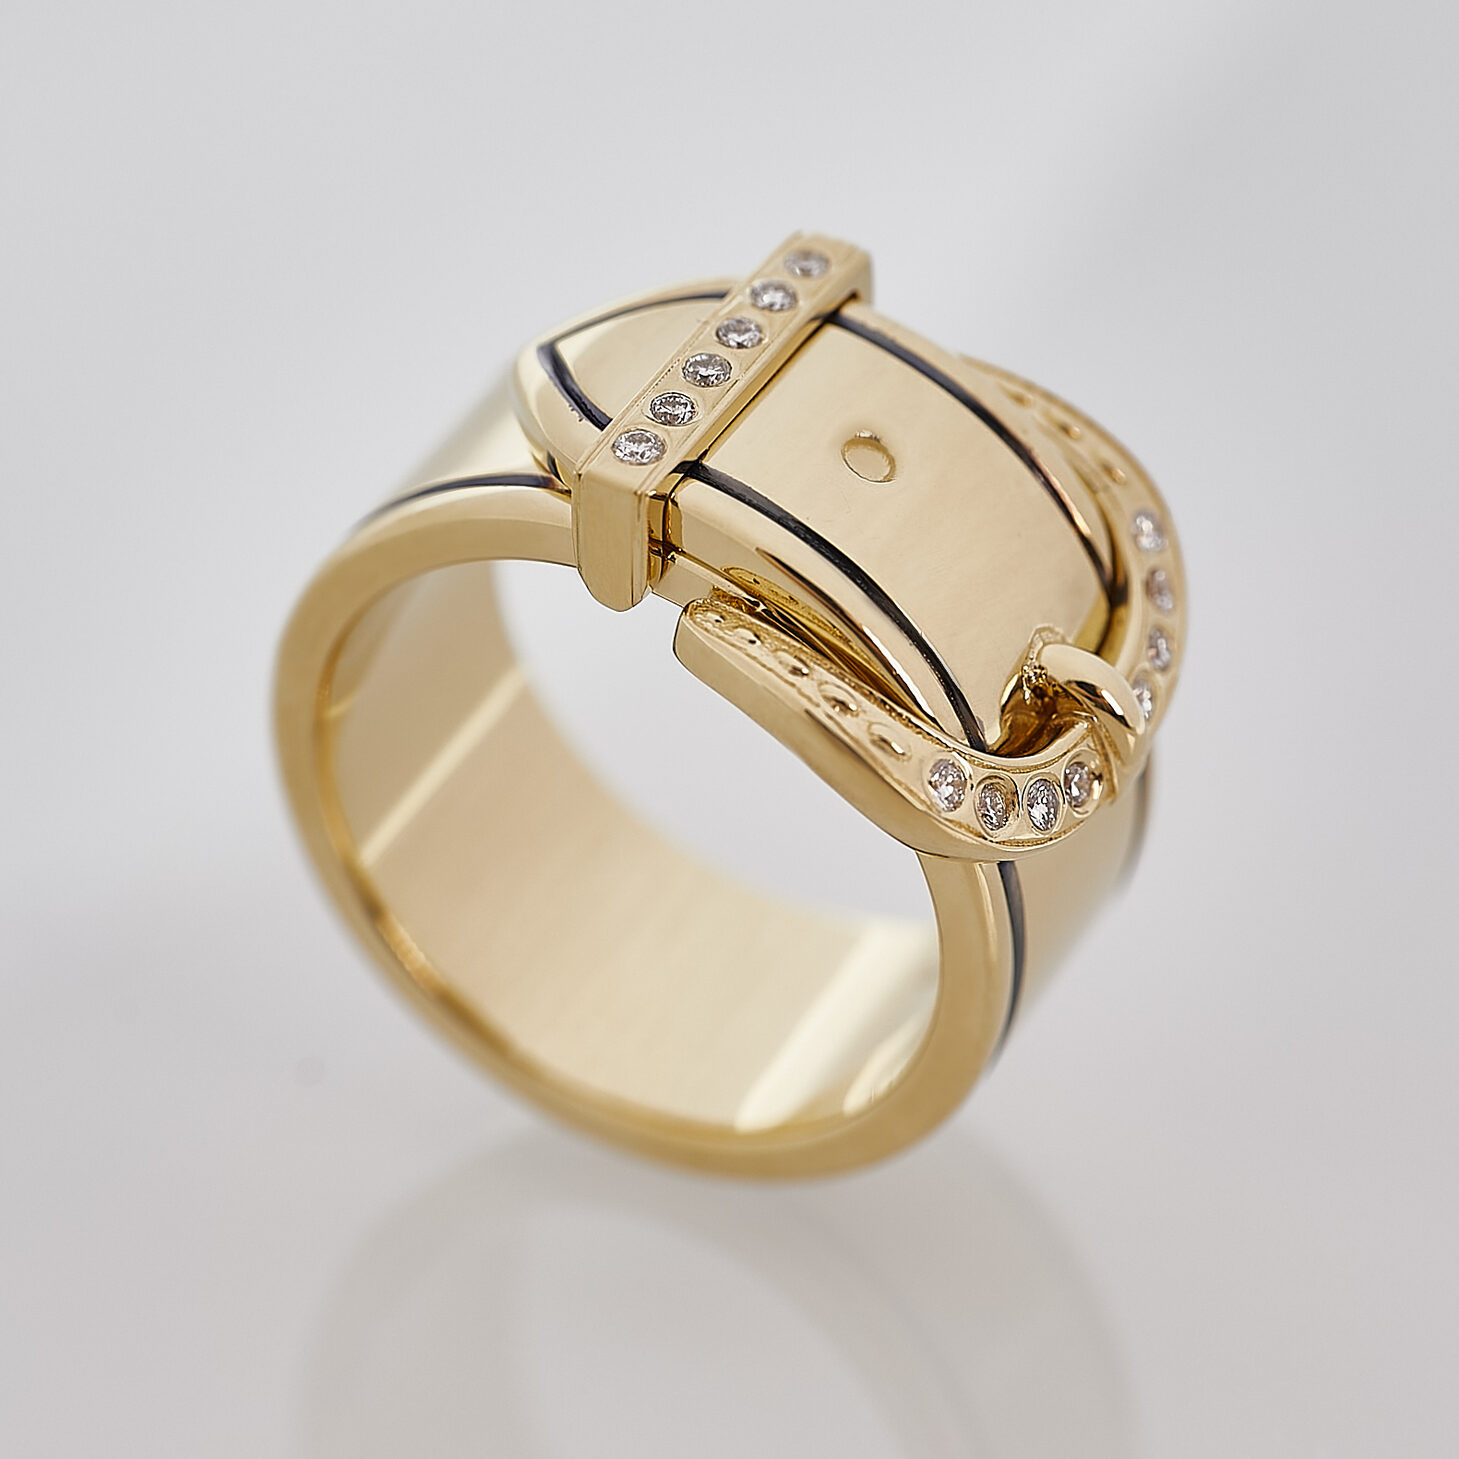 Кольцо в виде ремня из золота с чернением (Вес: 20 гр.)